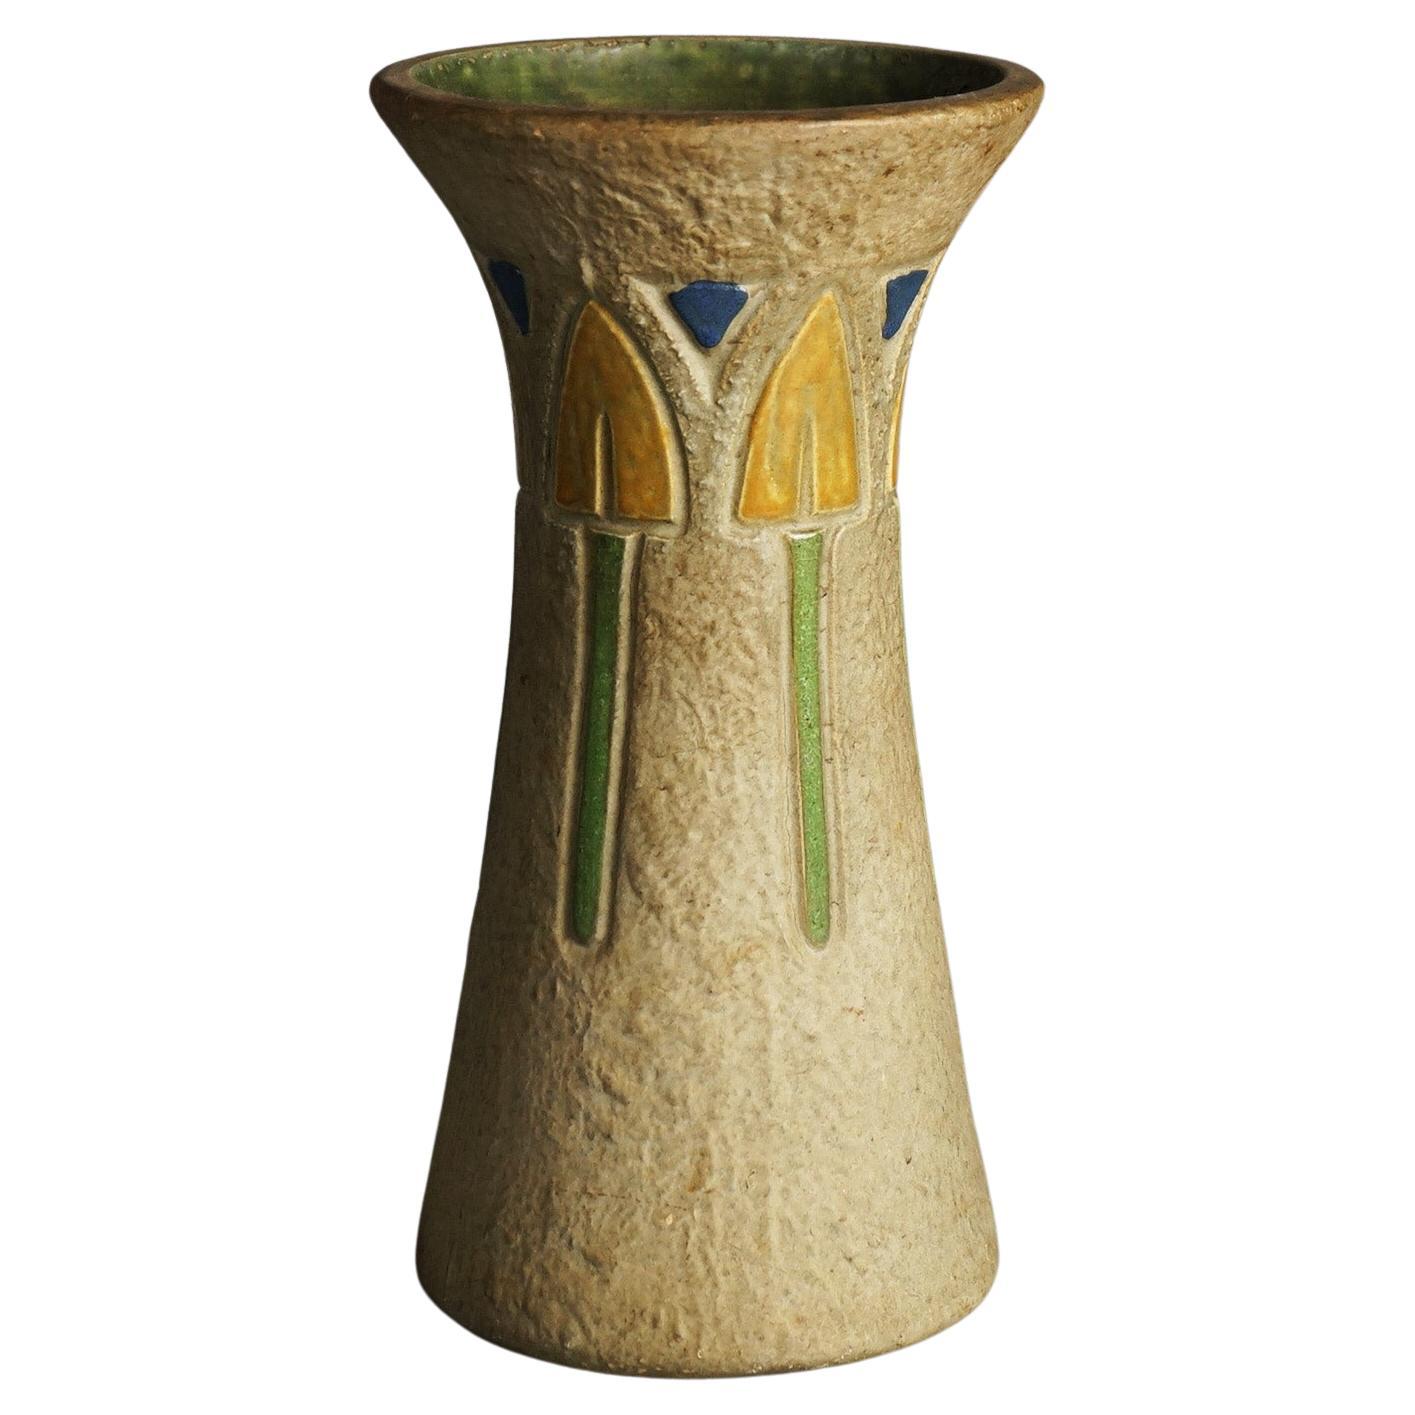 Antique Roseville Arts & Crafts Pottery Vase, Mystique, C1916